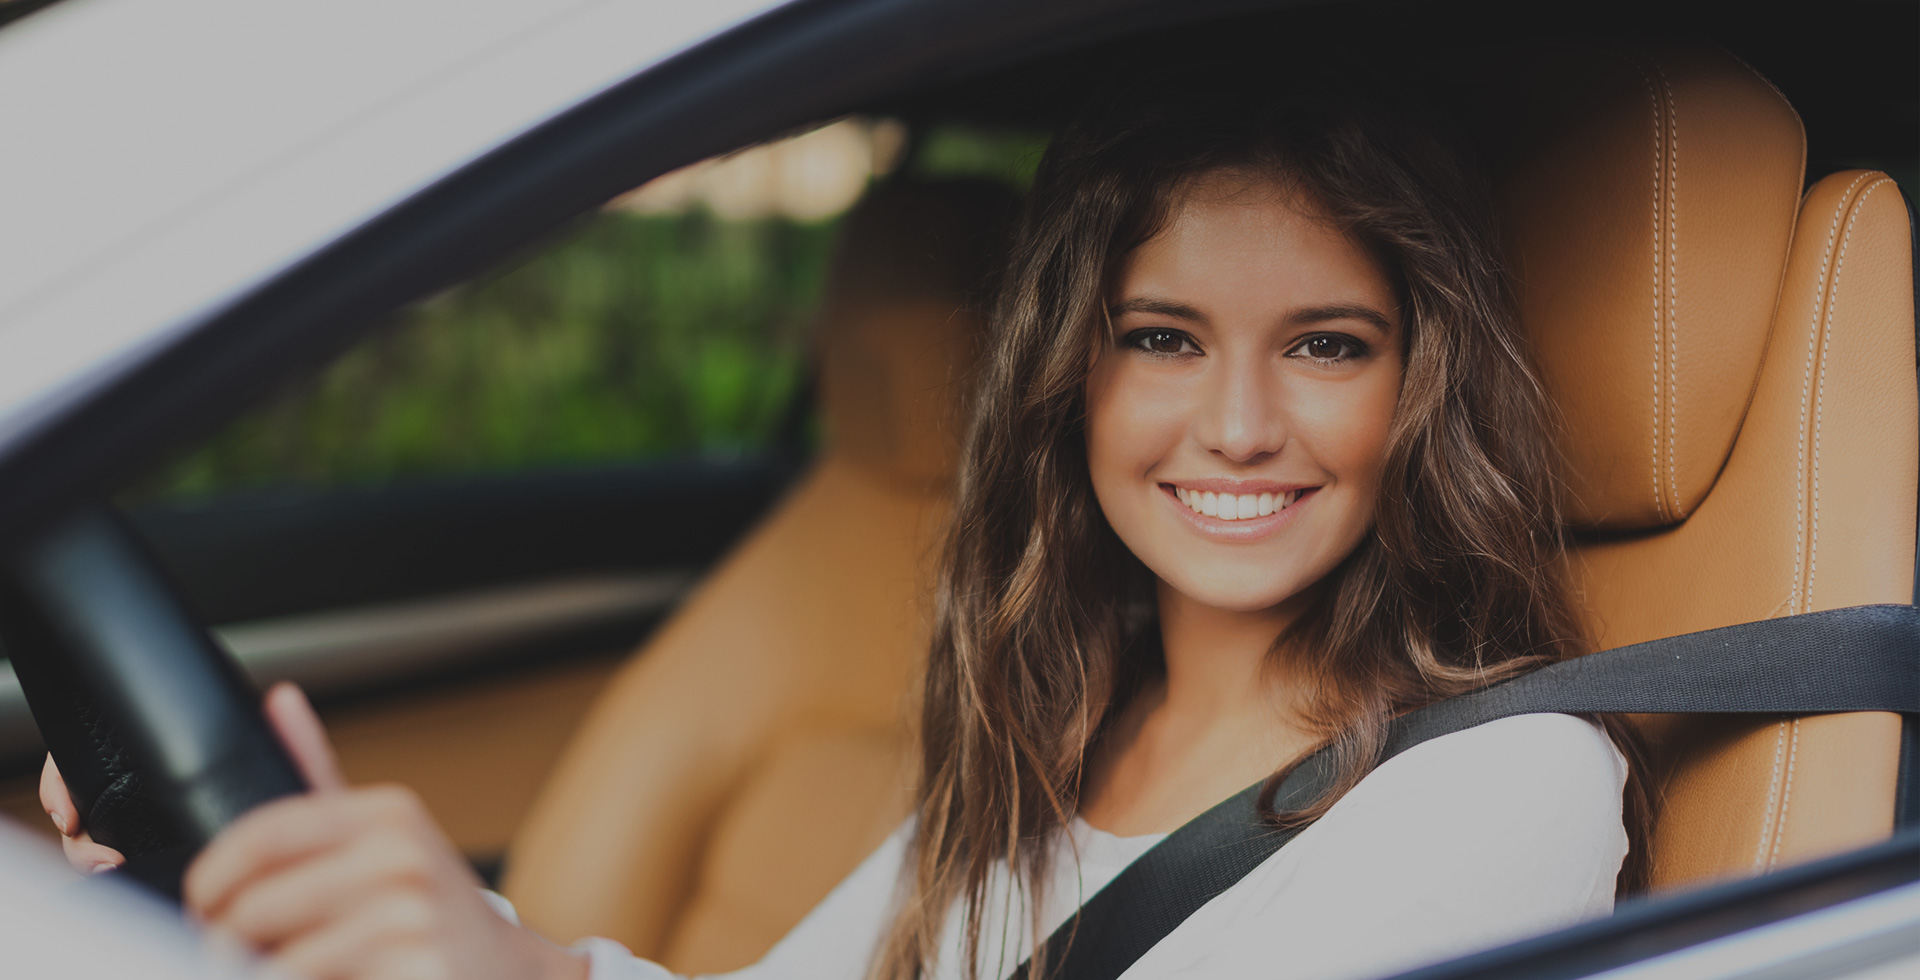 Woman driving car smiling